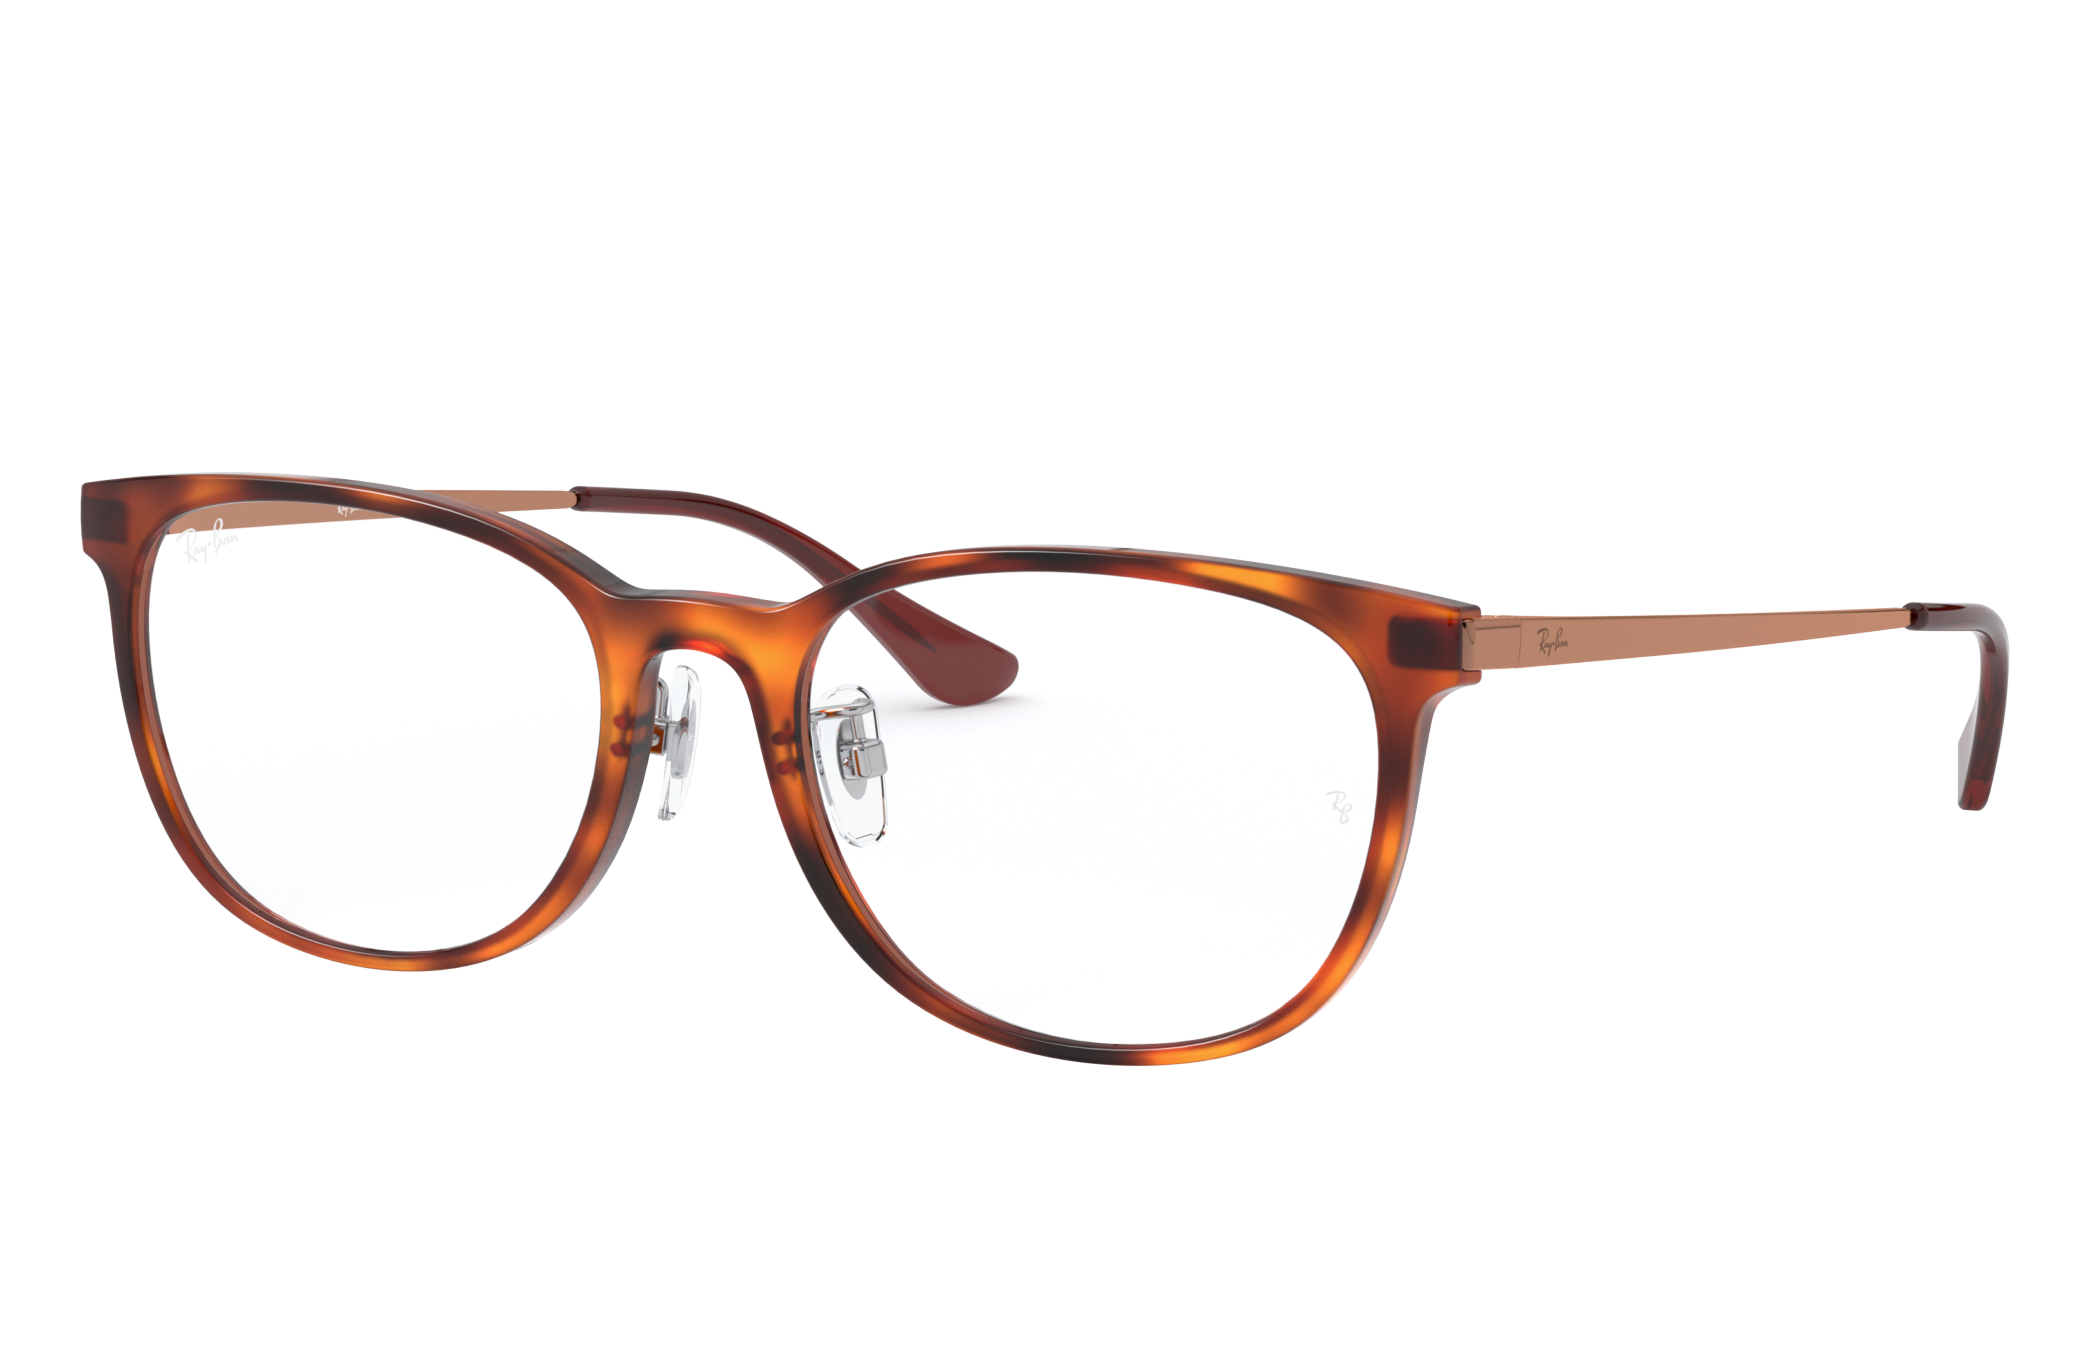 Rb7179d Eyeglasses with Tortoise Frame - RB7179D | Ray-Ban®